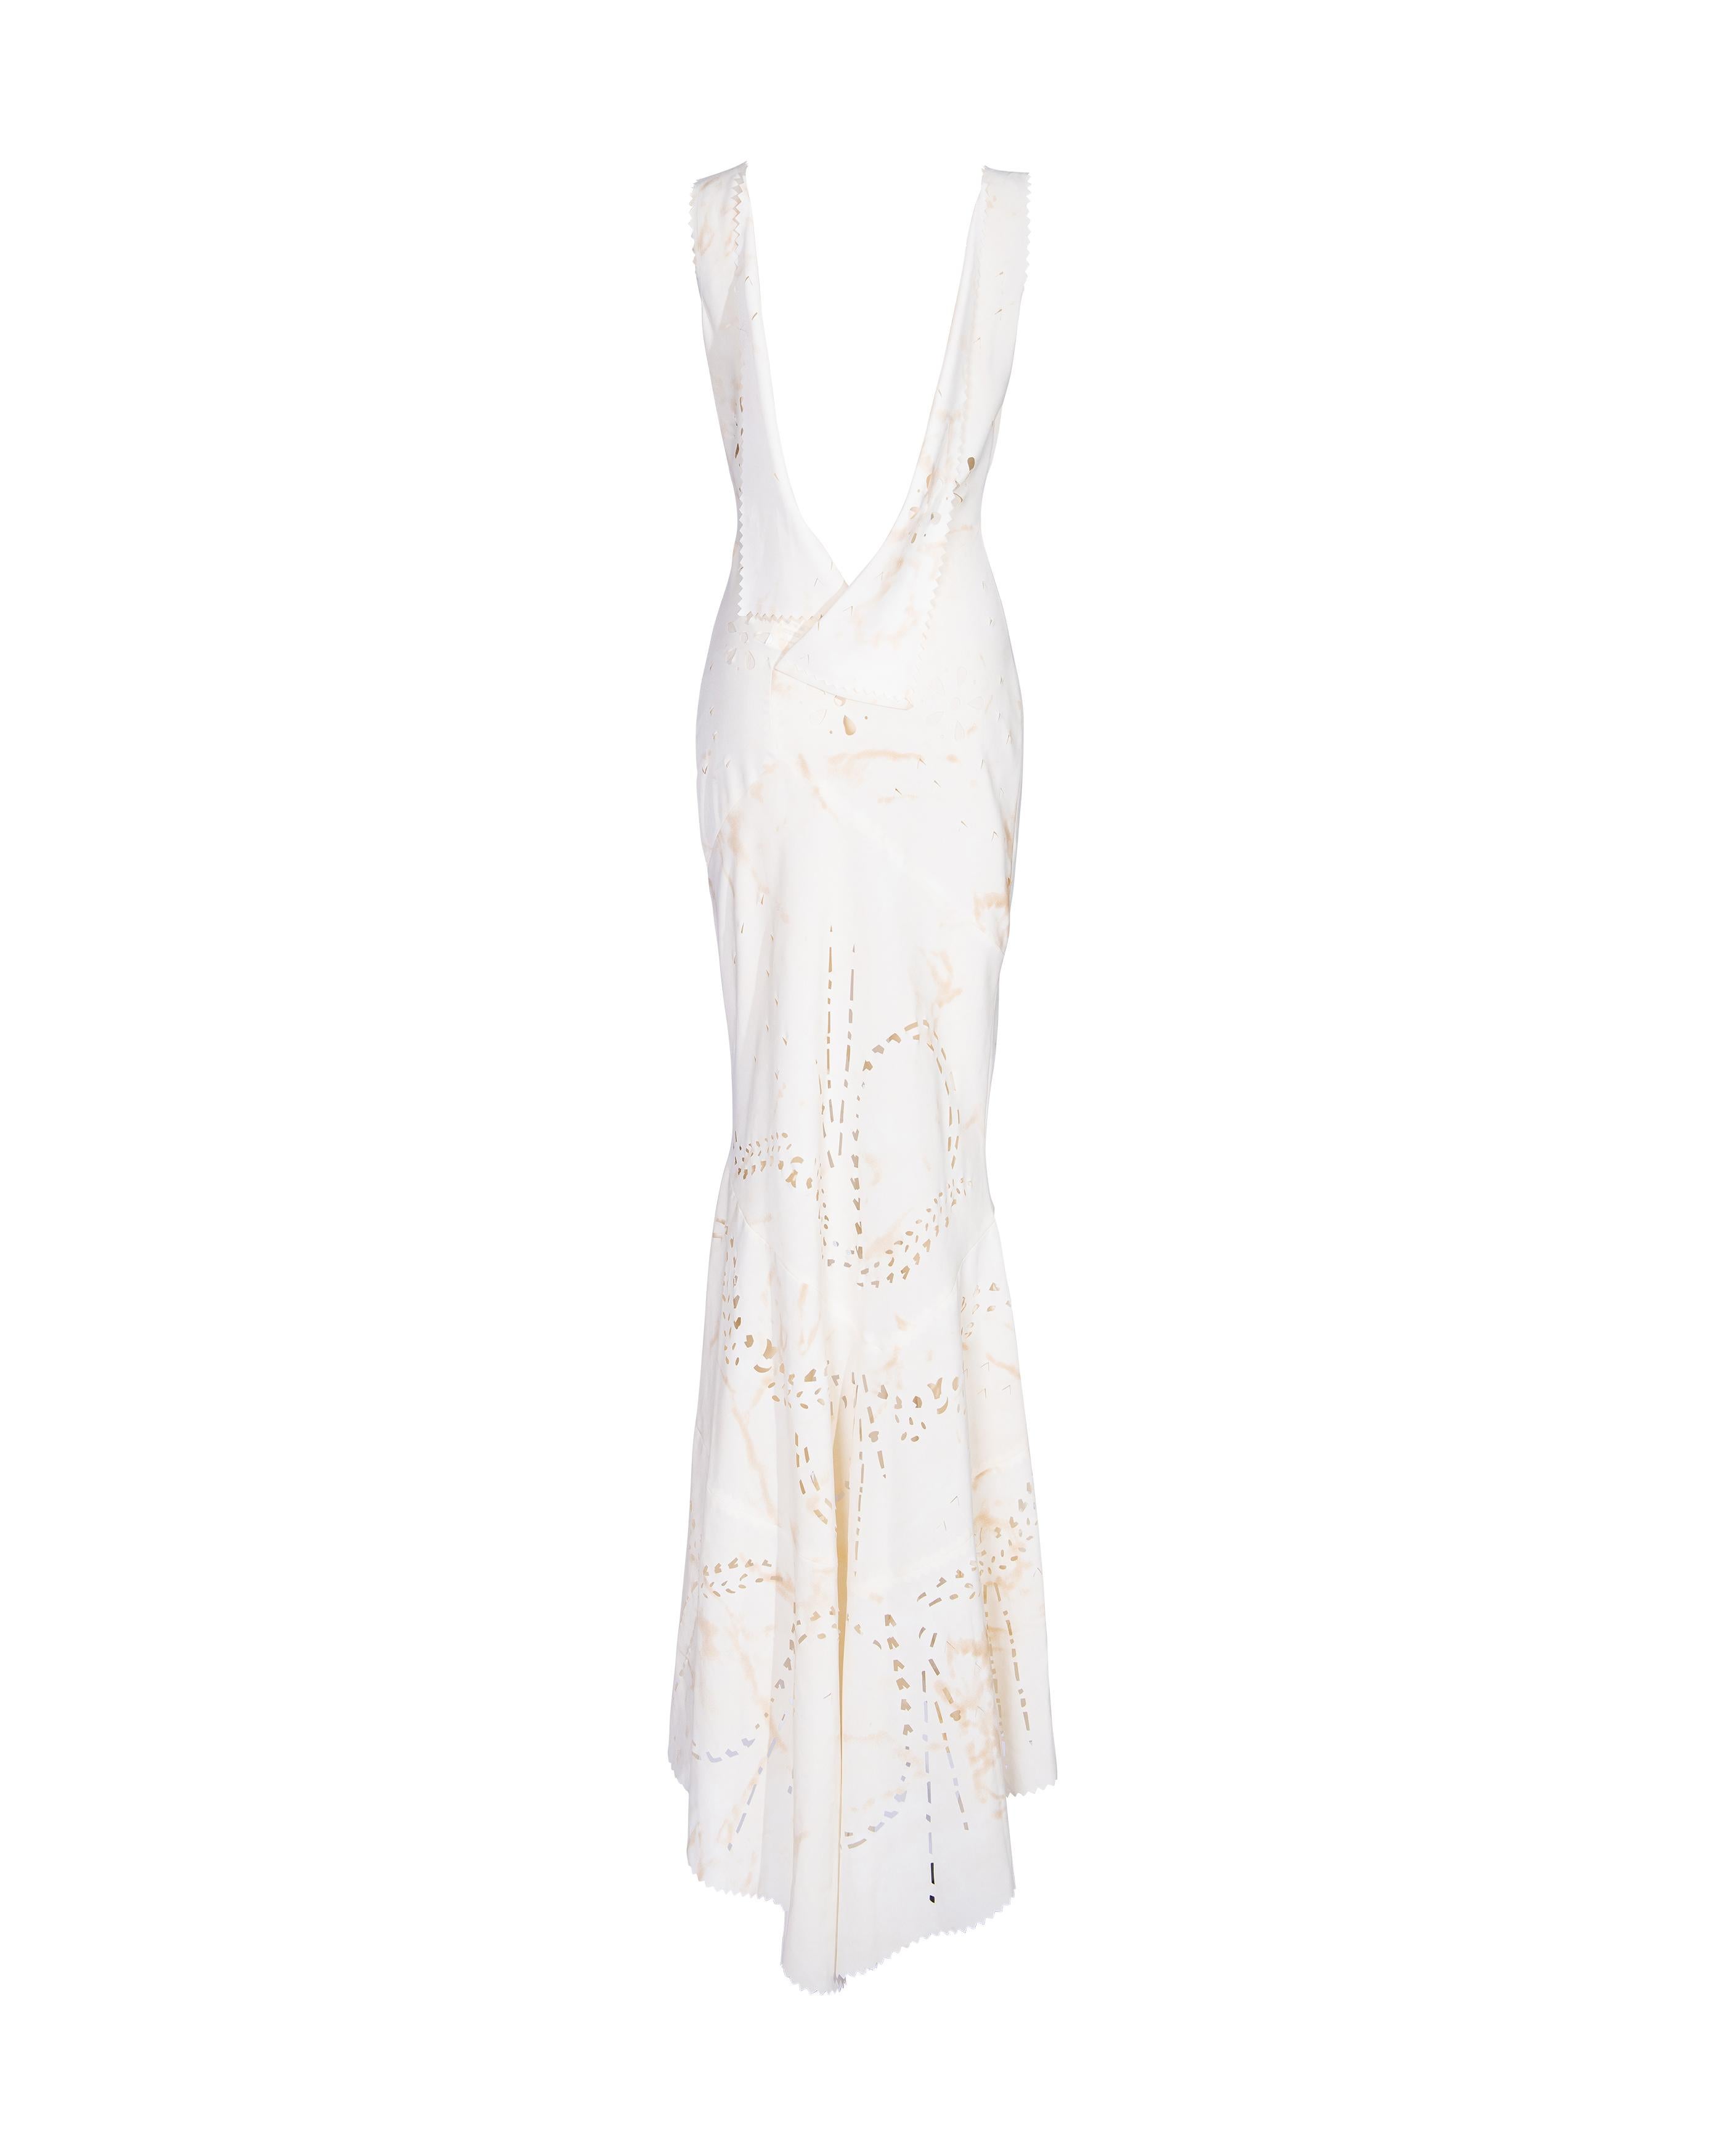 A/W 2001 John Galliano Bias Cut Cream Gown with Lasercut Floral Details 6